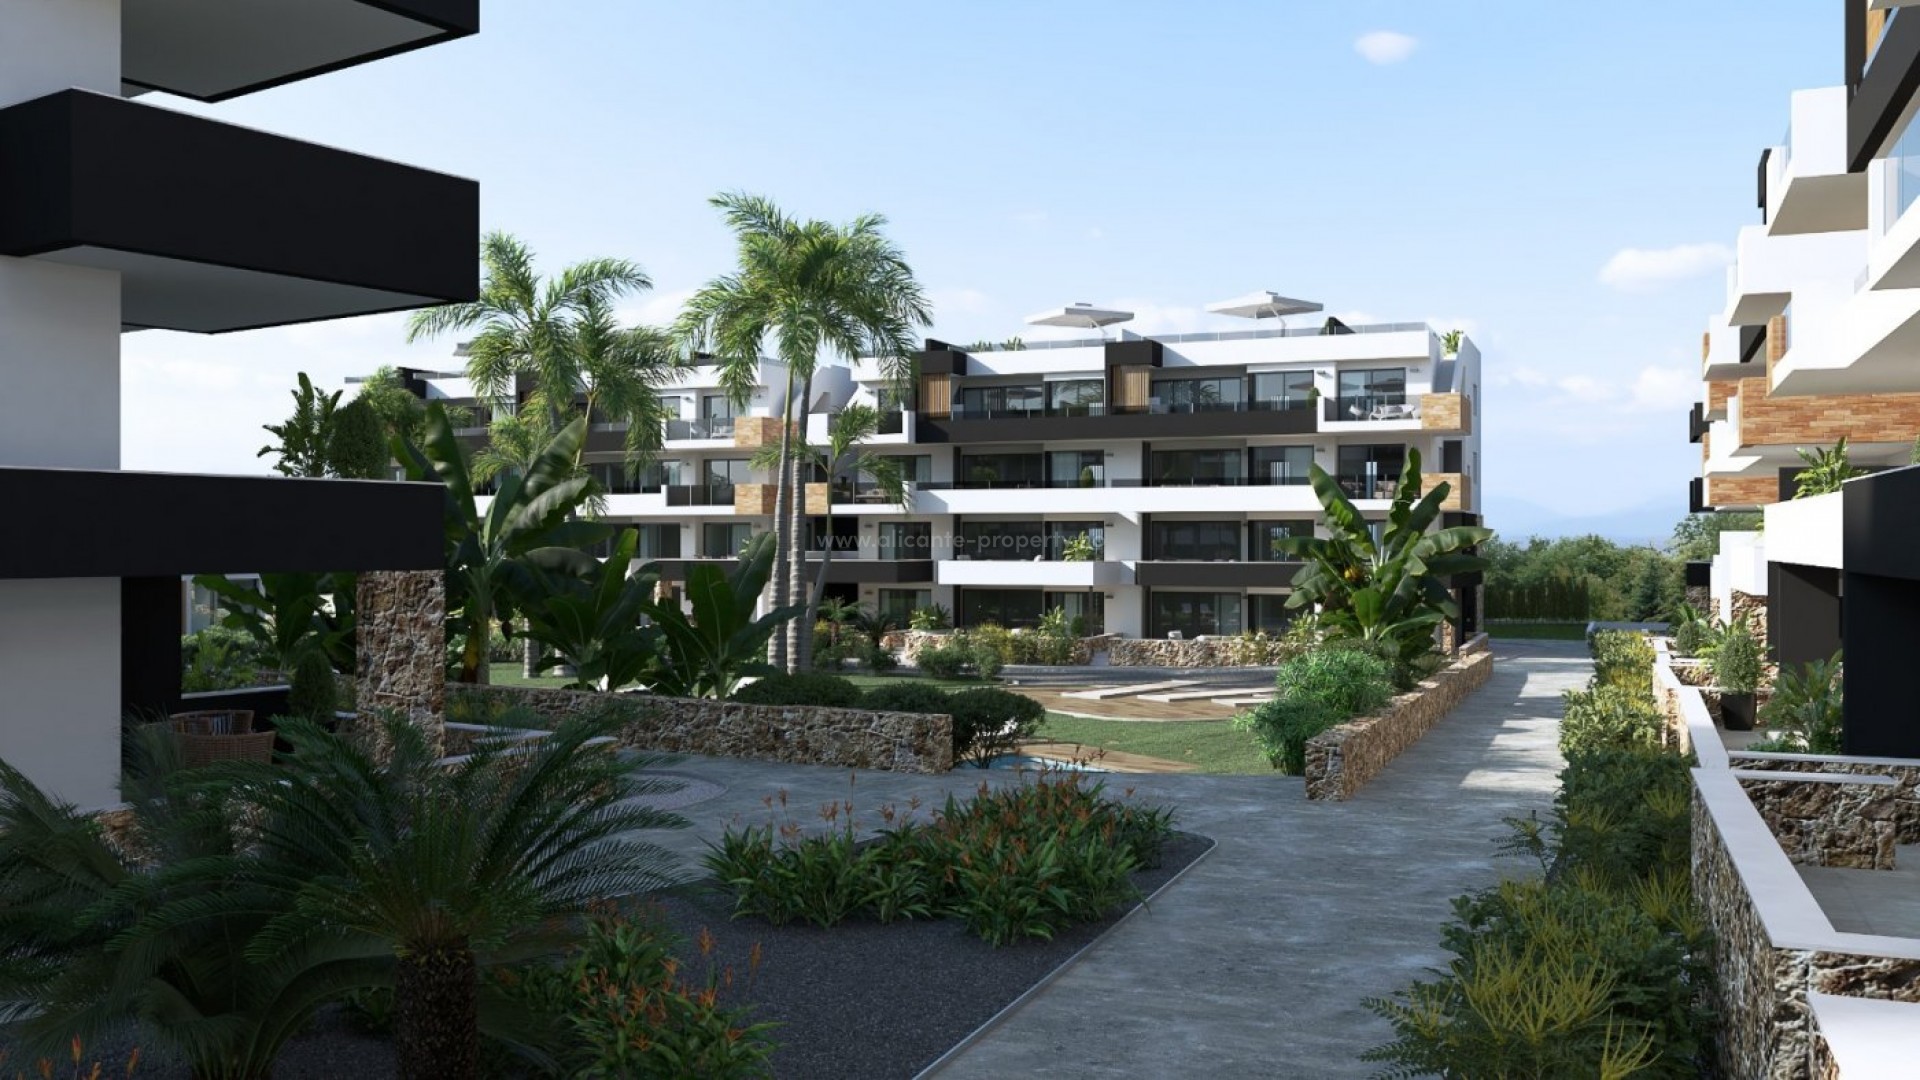 Residential complex of modern apartments/penthouses in Los Altos, Orihuela Costa, 2 bedrooms, 2 bathrooms, garden or terrace or private solarium.